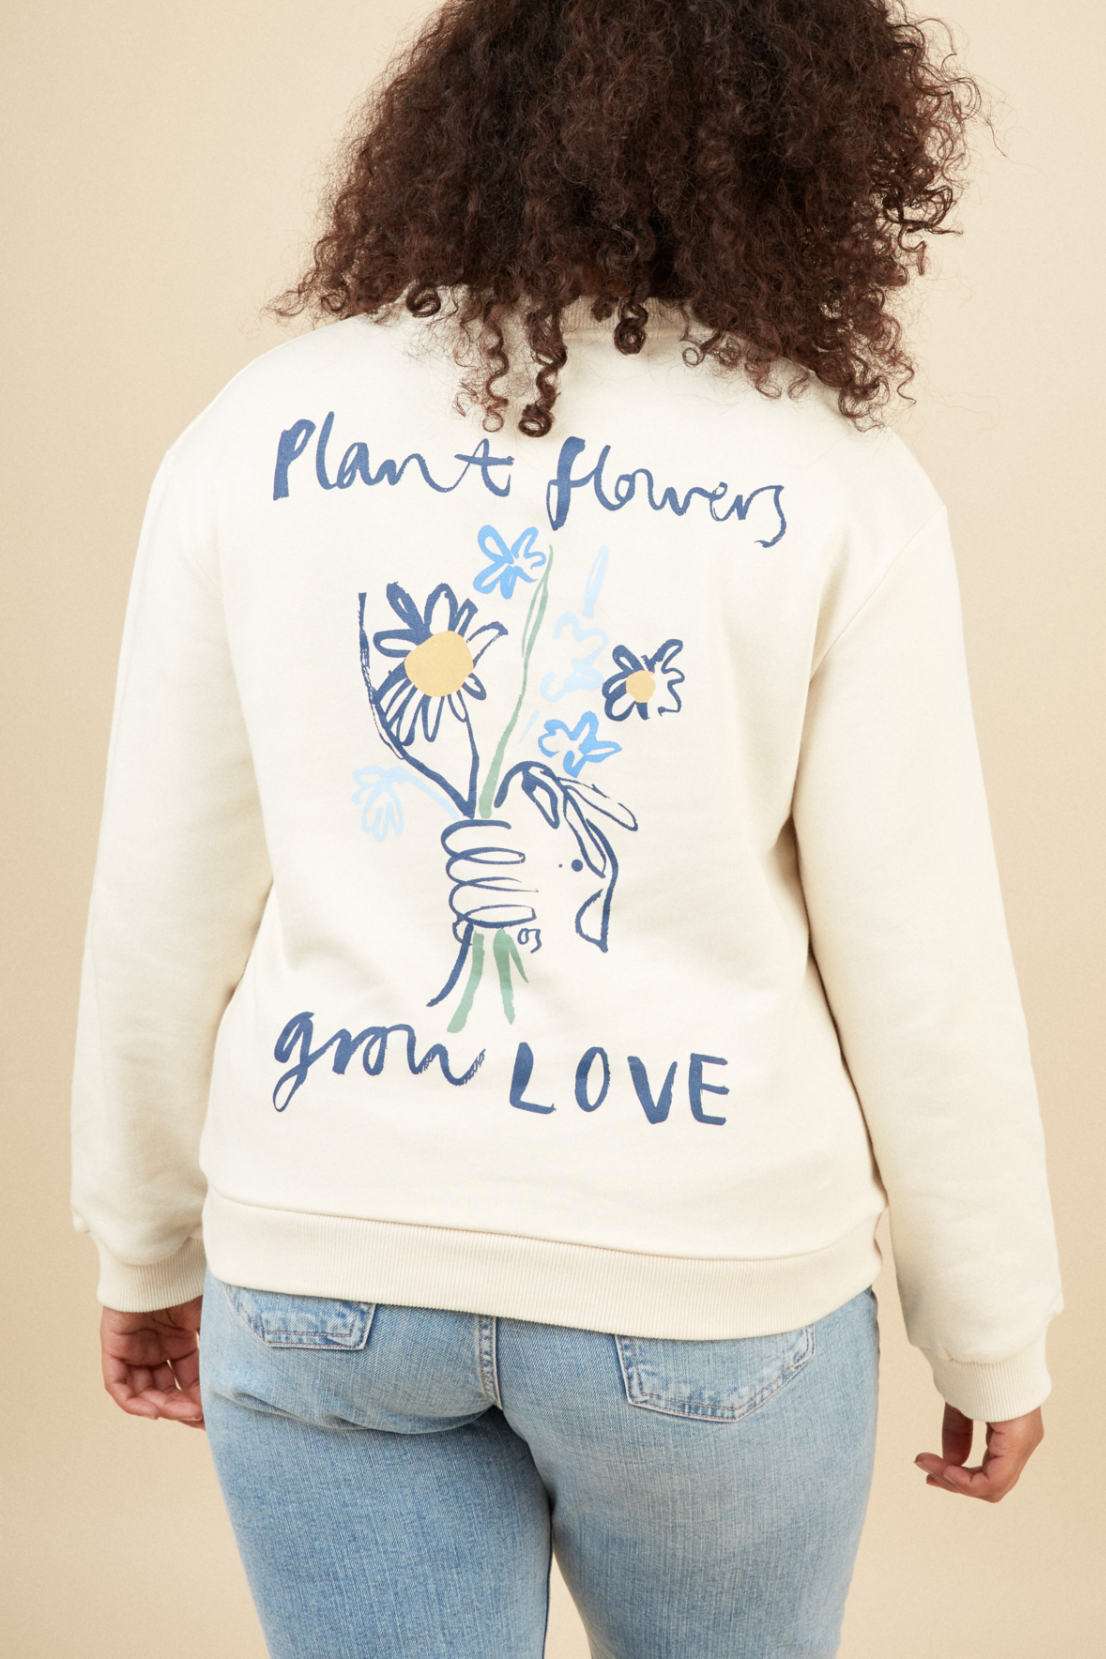 O&F Plant Flowers Grow Love Sweatshirt